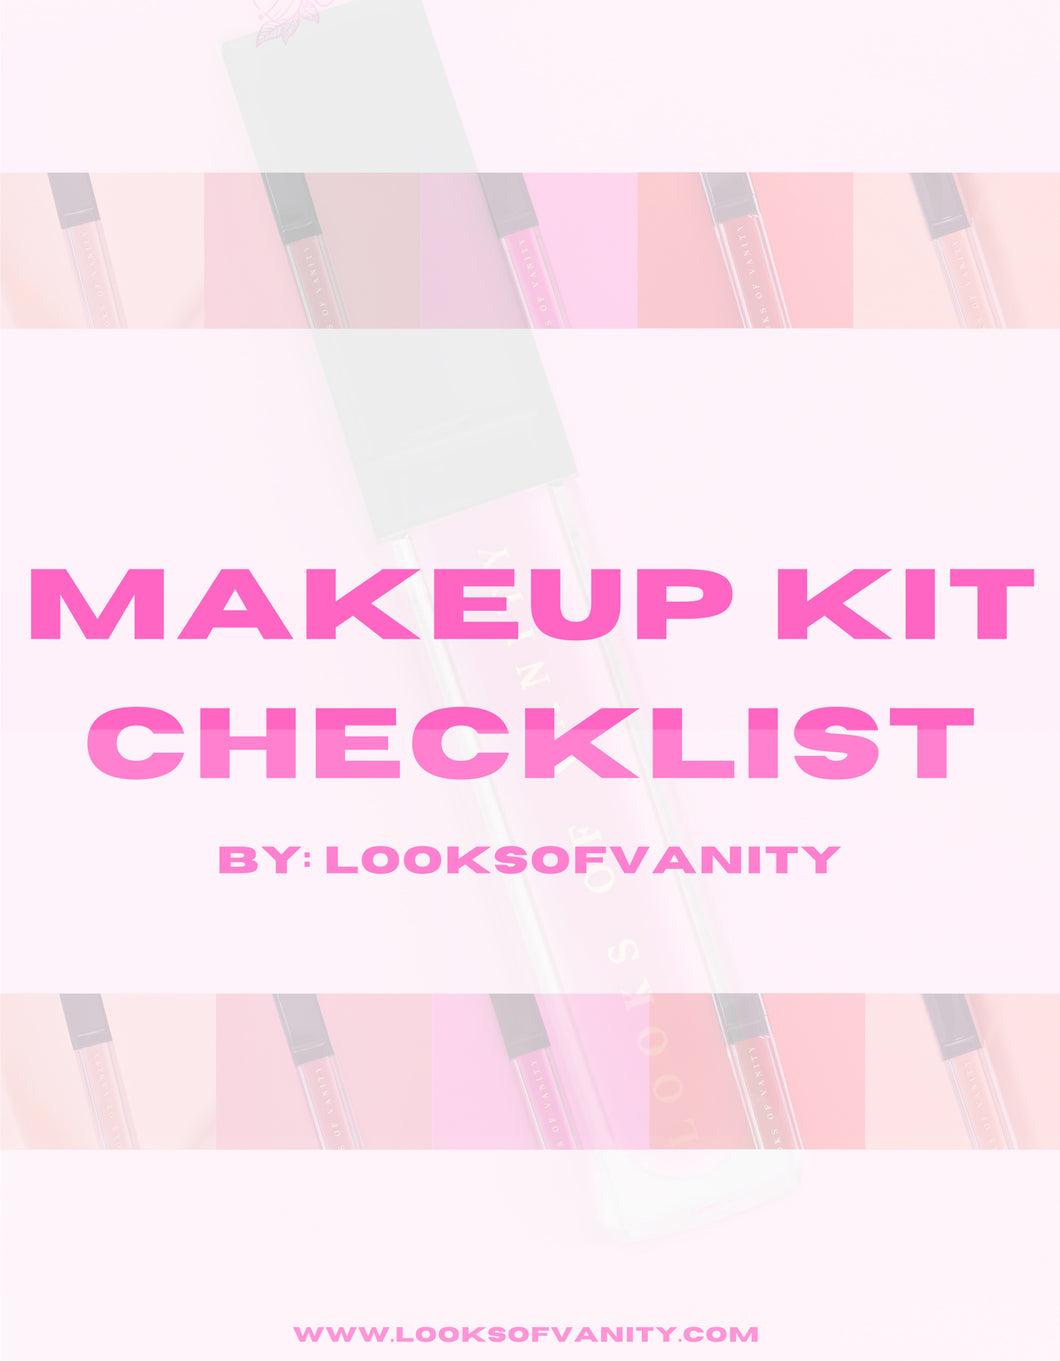 Makeup Kit Checklist by: LooksofVanity